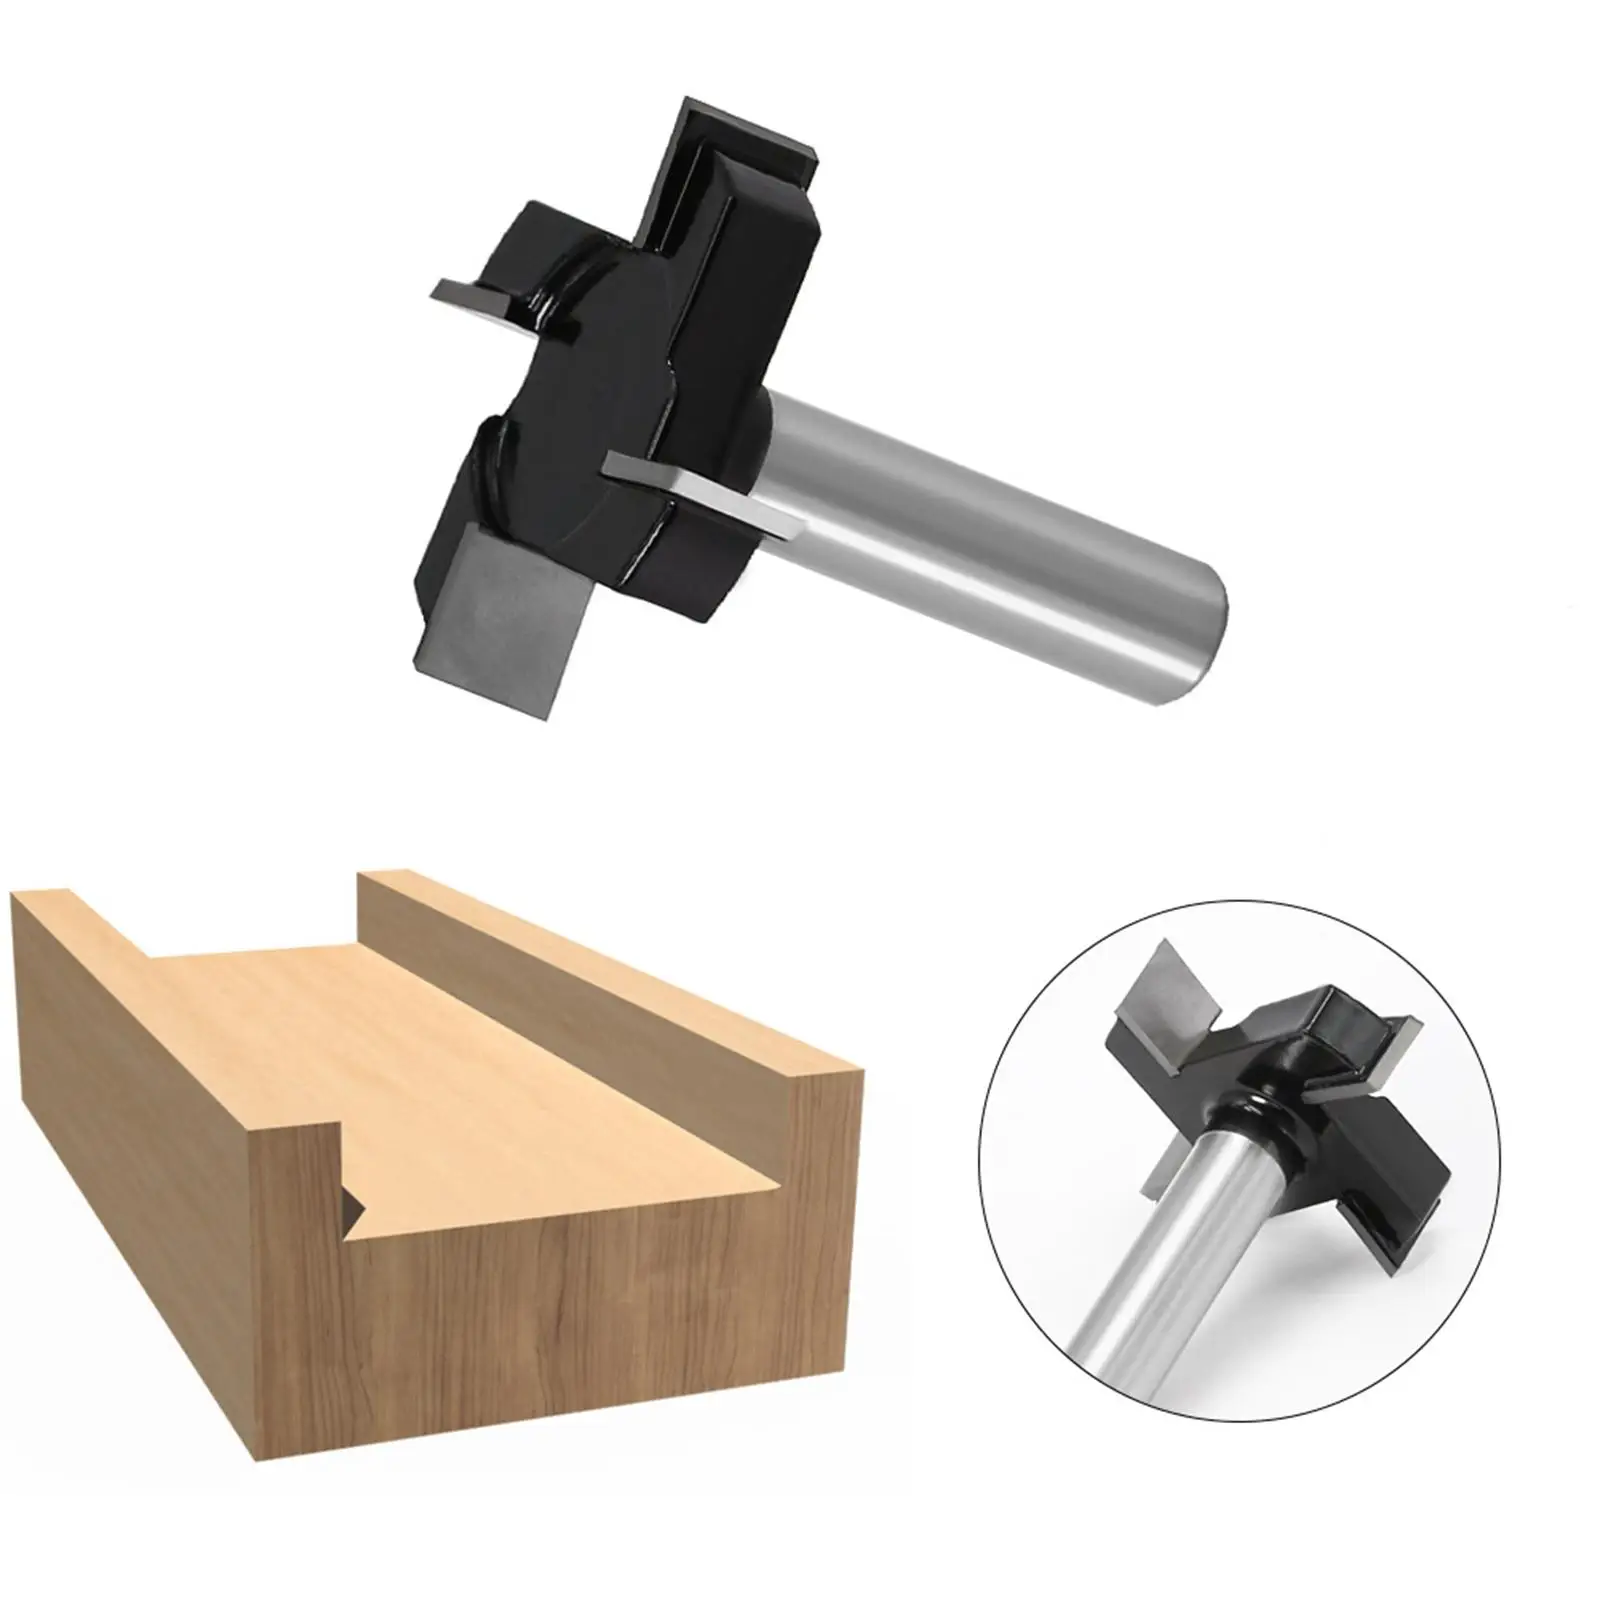 Wood Slb Flttening Router Bit 2inch Cutting Dimeter Woodworking Tools Plning Wood Plner Bit Crbide Plner Router Bits